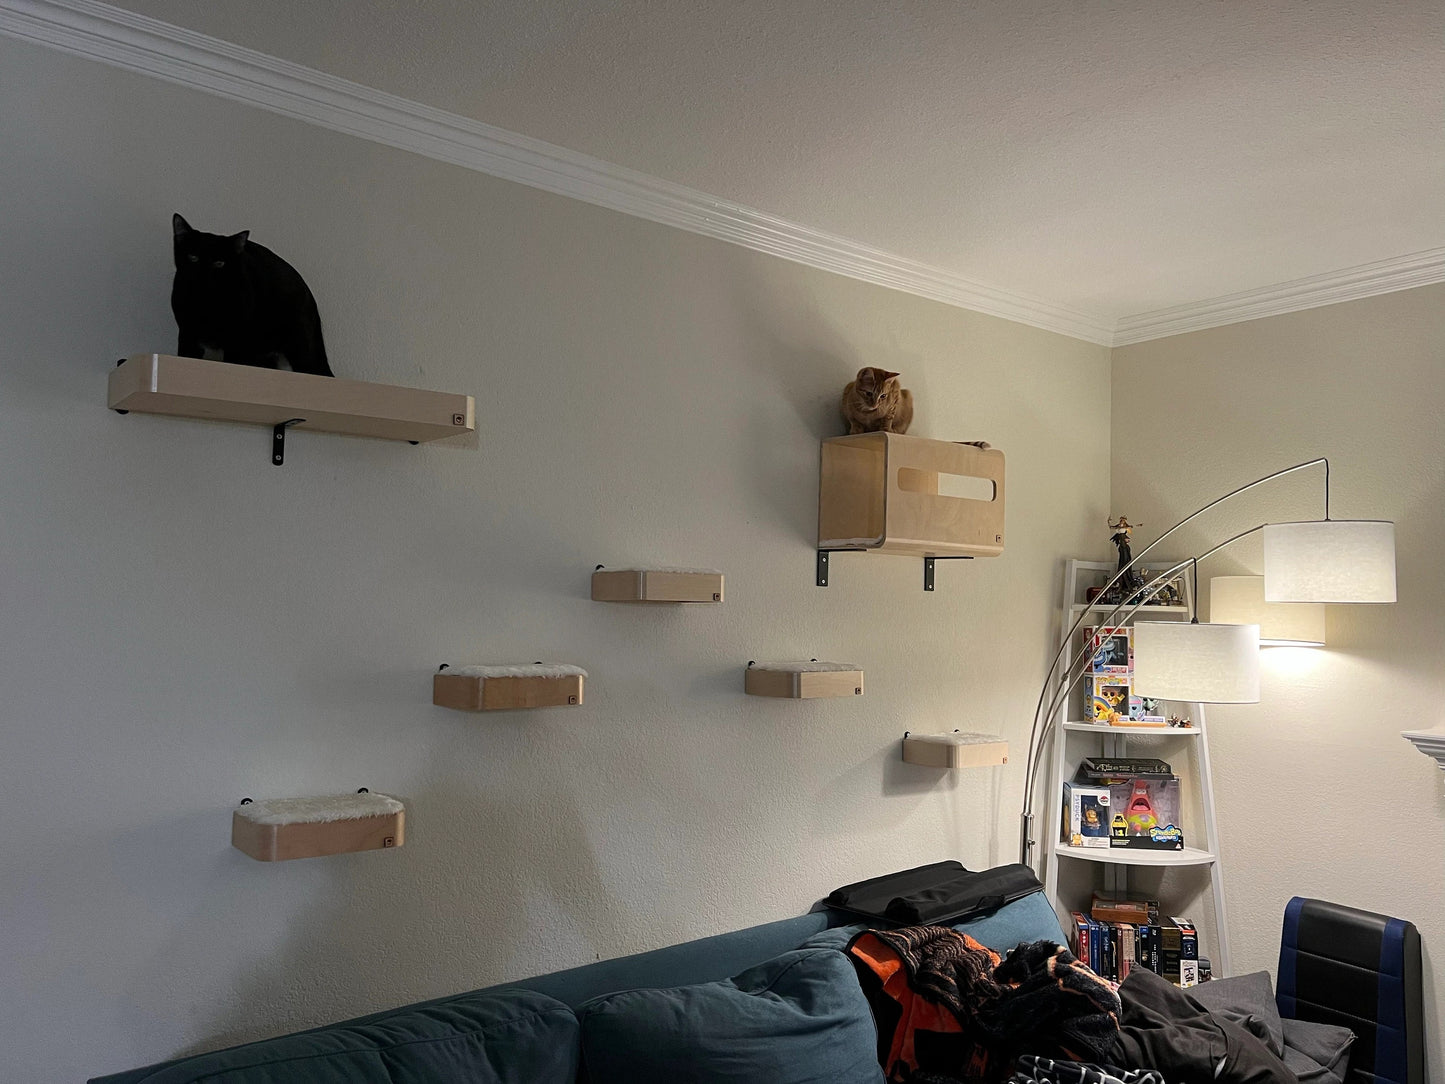 Cat Wall Steps, Cat Stairs, Cat Shelf, Wood Cat Climbing Shelf, Cat Wall Furniture